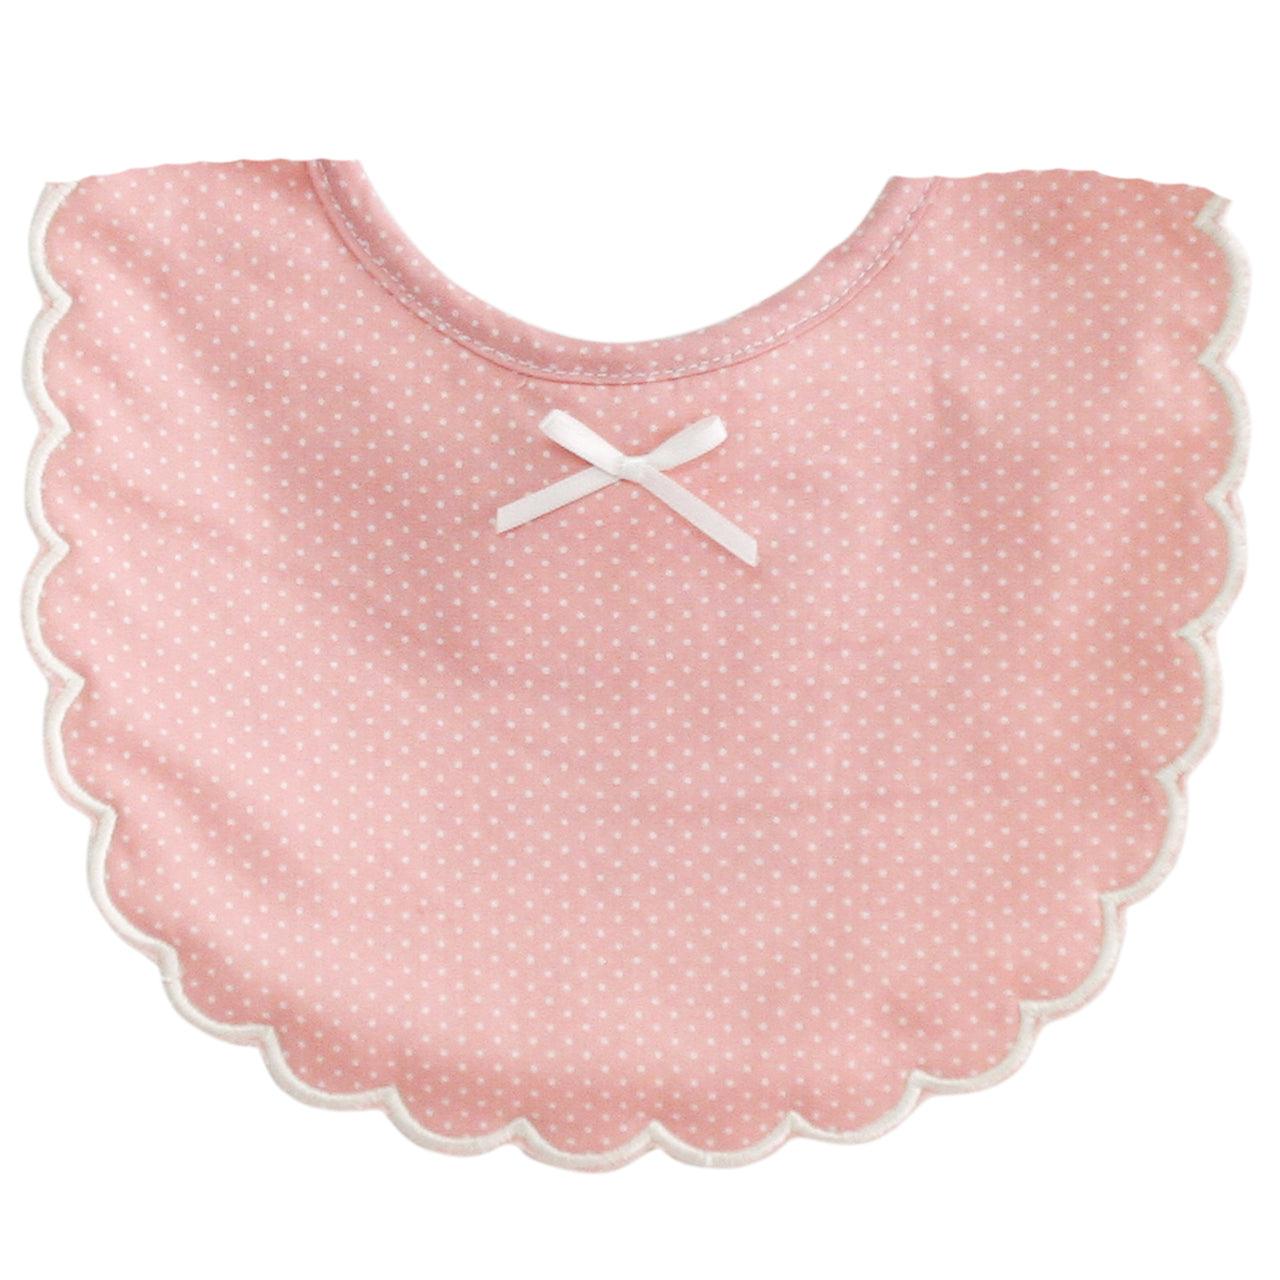 Alimrose Designs Scallop Edge Bib Pink with Ivory Spot - bib - Alimrose